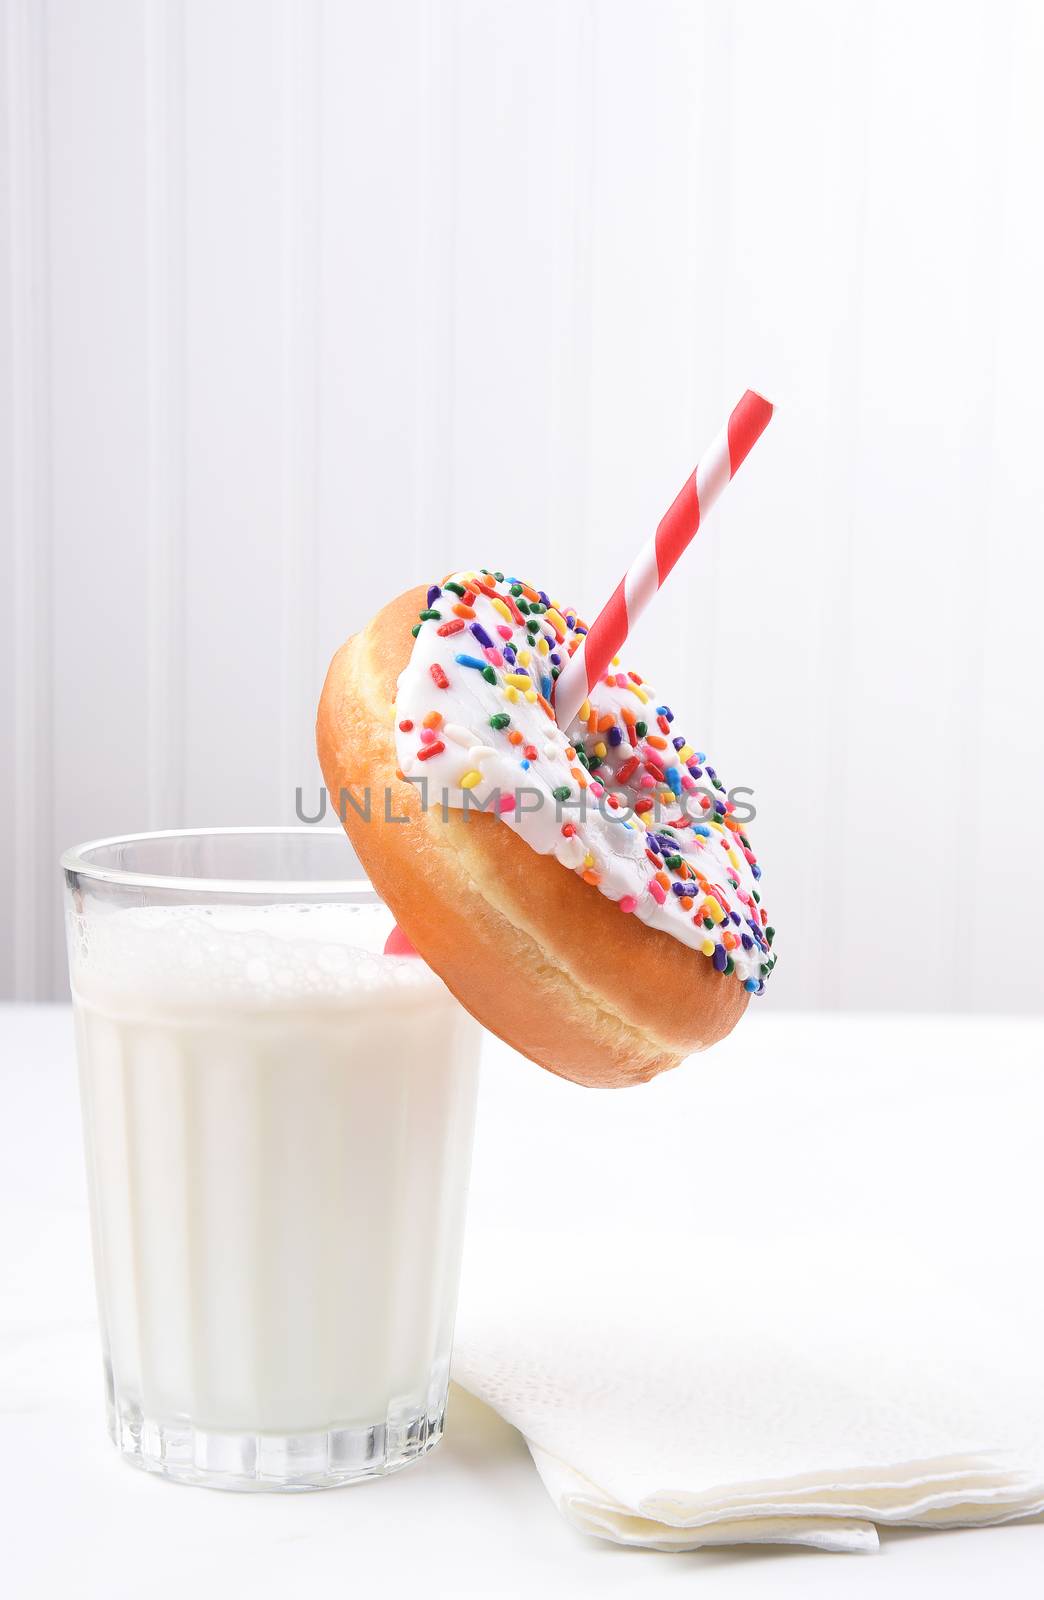 Glass of Milk and Donut by sCukrov